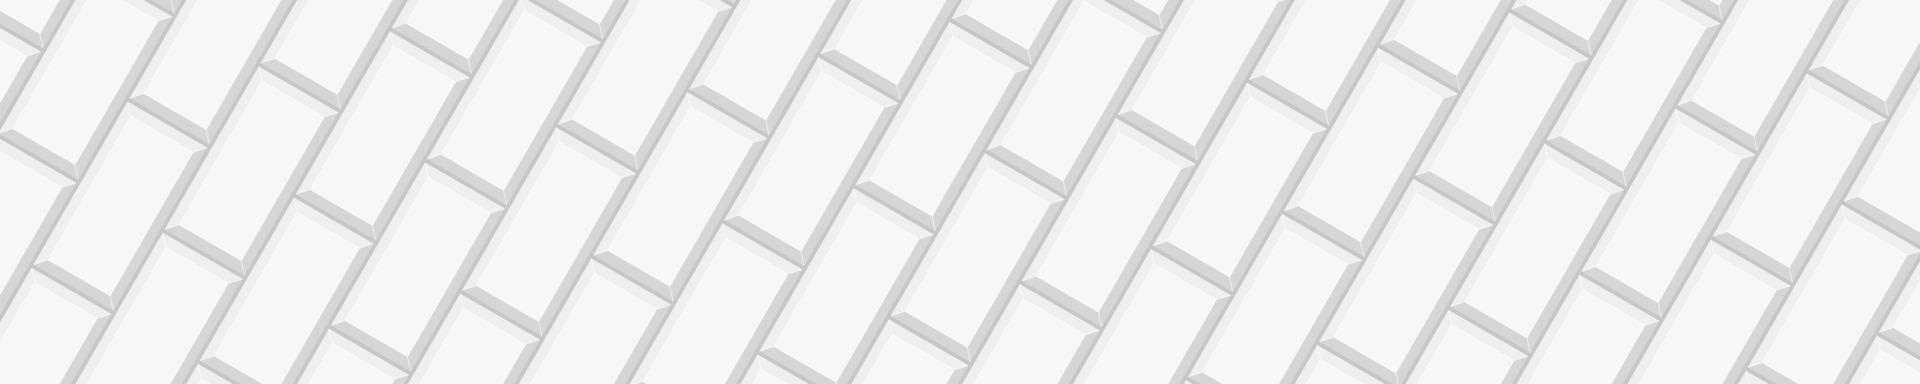 White rectangles tile in diagonal arrangement. Ceramic or stone brick wall horizontal background. Kitchen backsplash, bathroom floor, facade texture seamless pattern vector